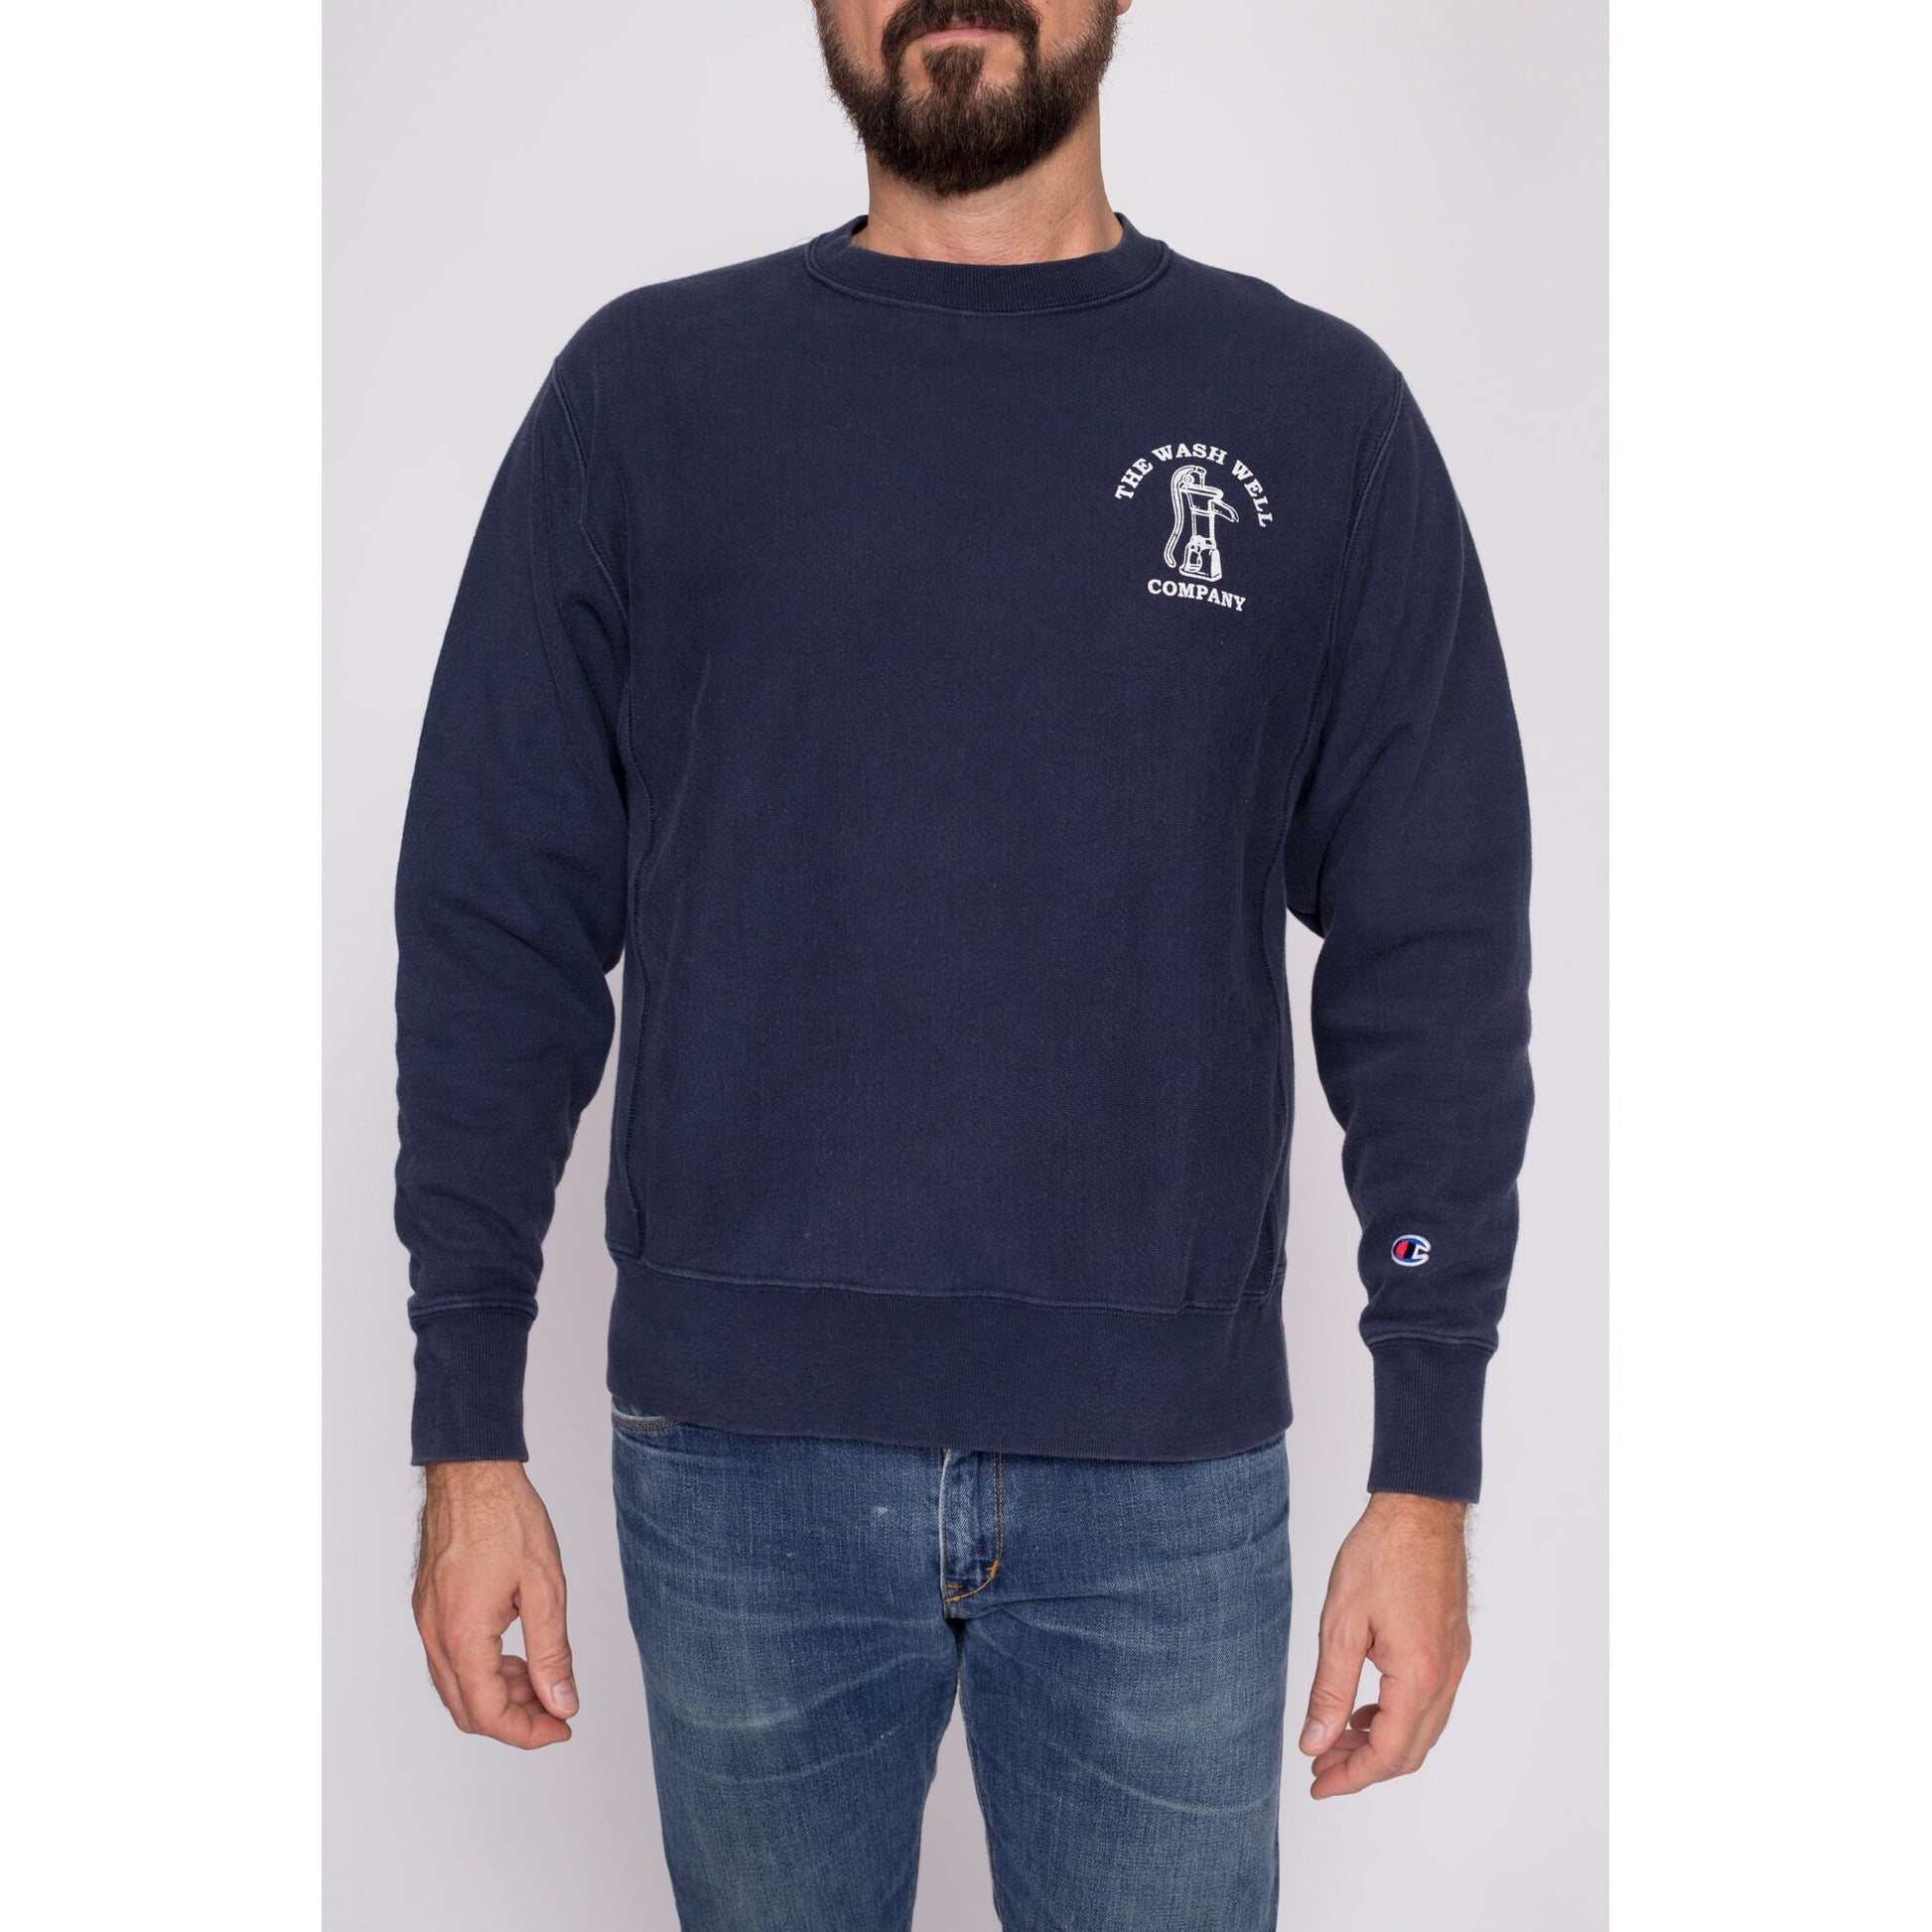 Medium Champion Reverse Weave "The Wash Well Company" Sweatshirt | Y2K Navy Blue Funny Graphic Crewneck